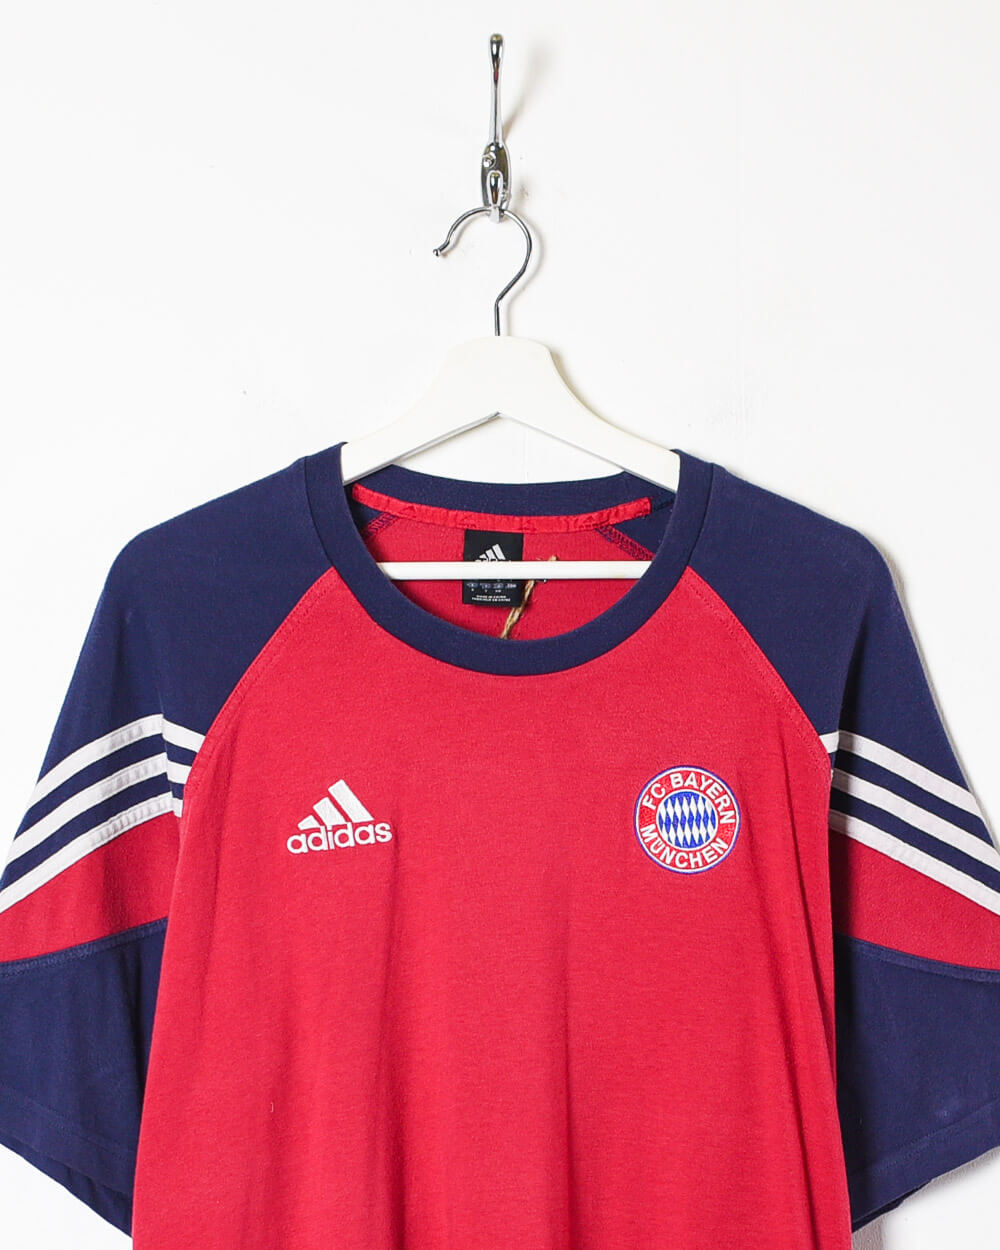 Red Adidas Bayern Munich T-Shirt - Medium